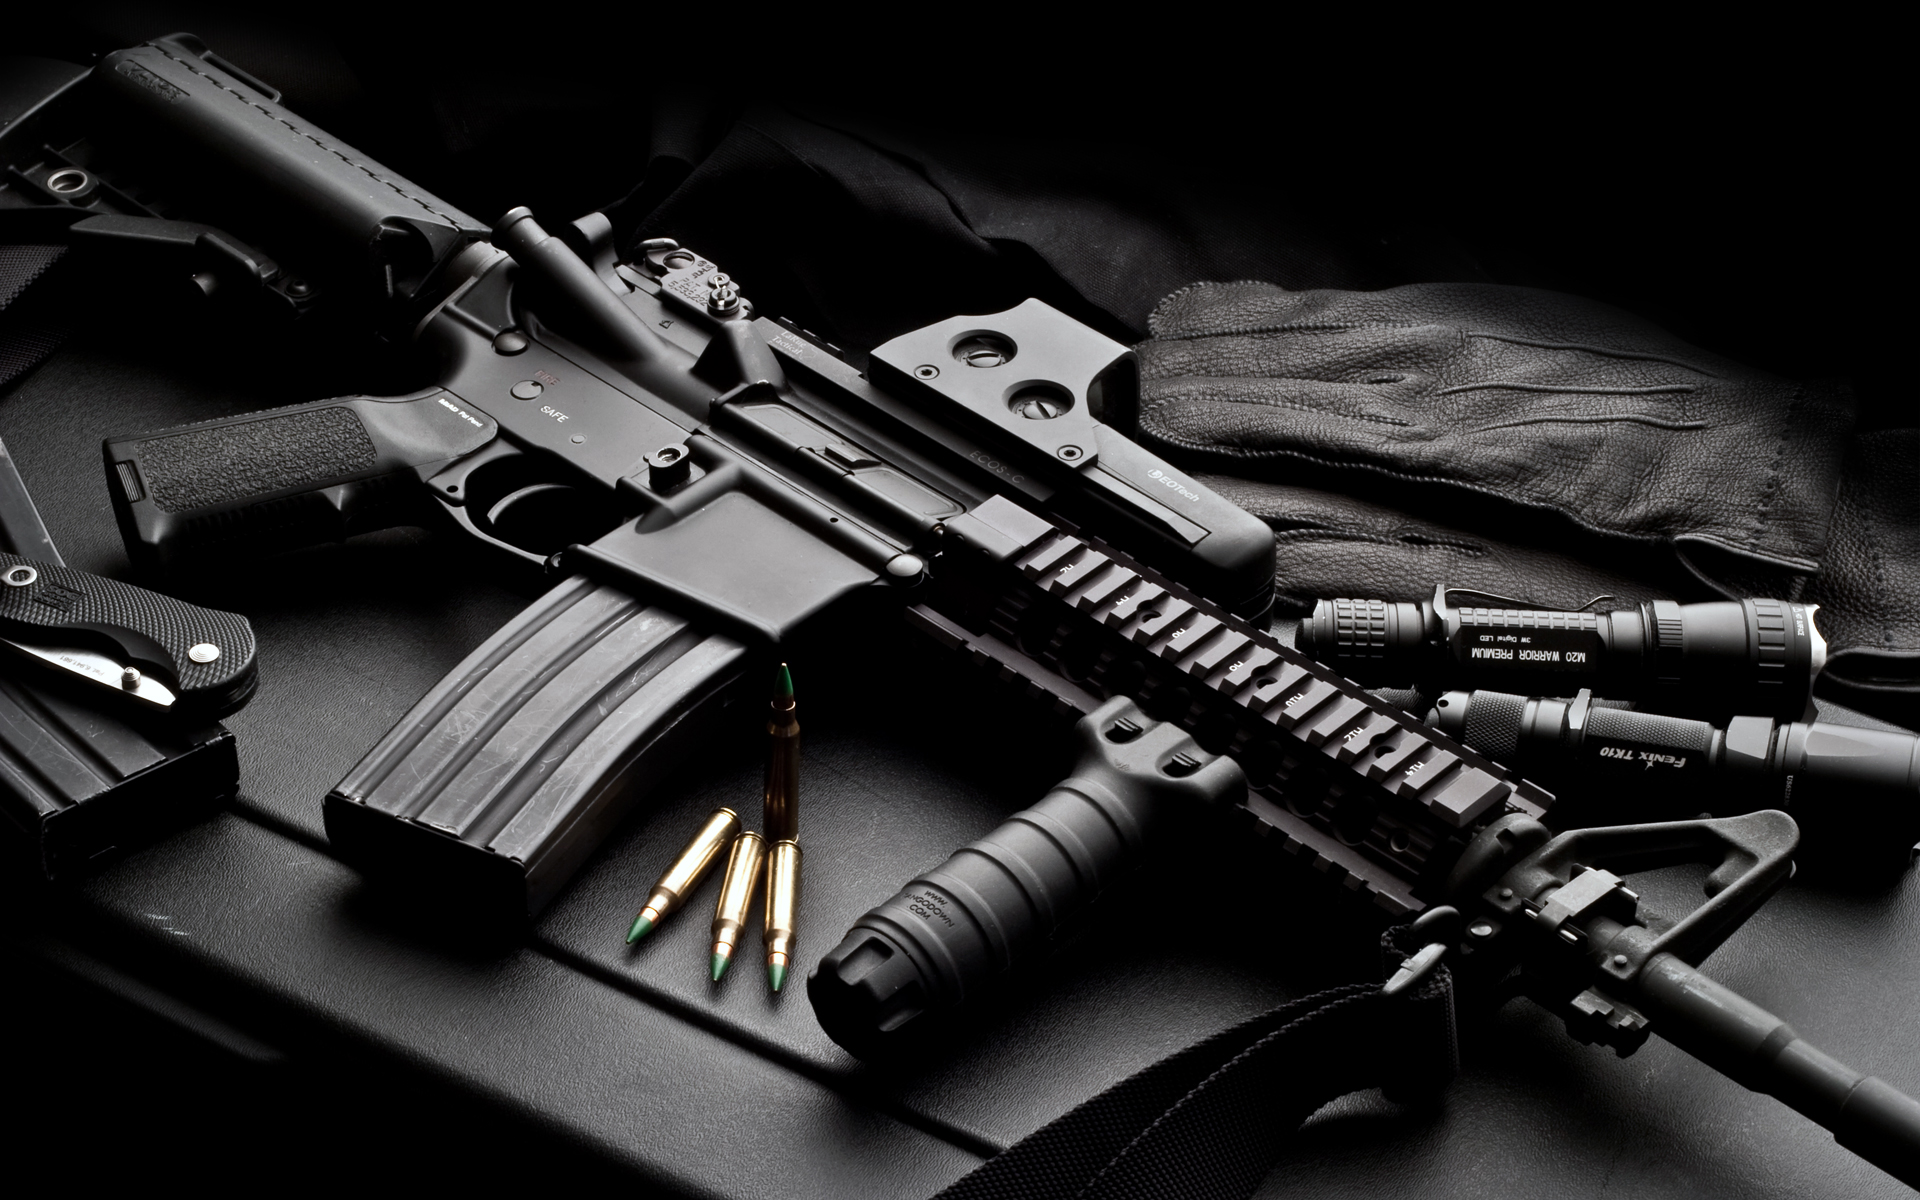 Drawn Gun Draco  Assault Rifle PNG Image  Transparent PNG Free Download  on SeekPNG